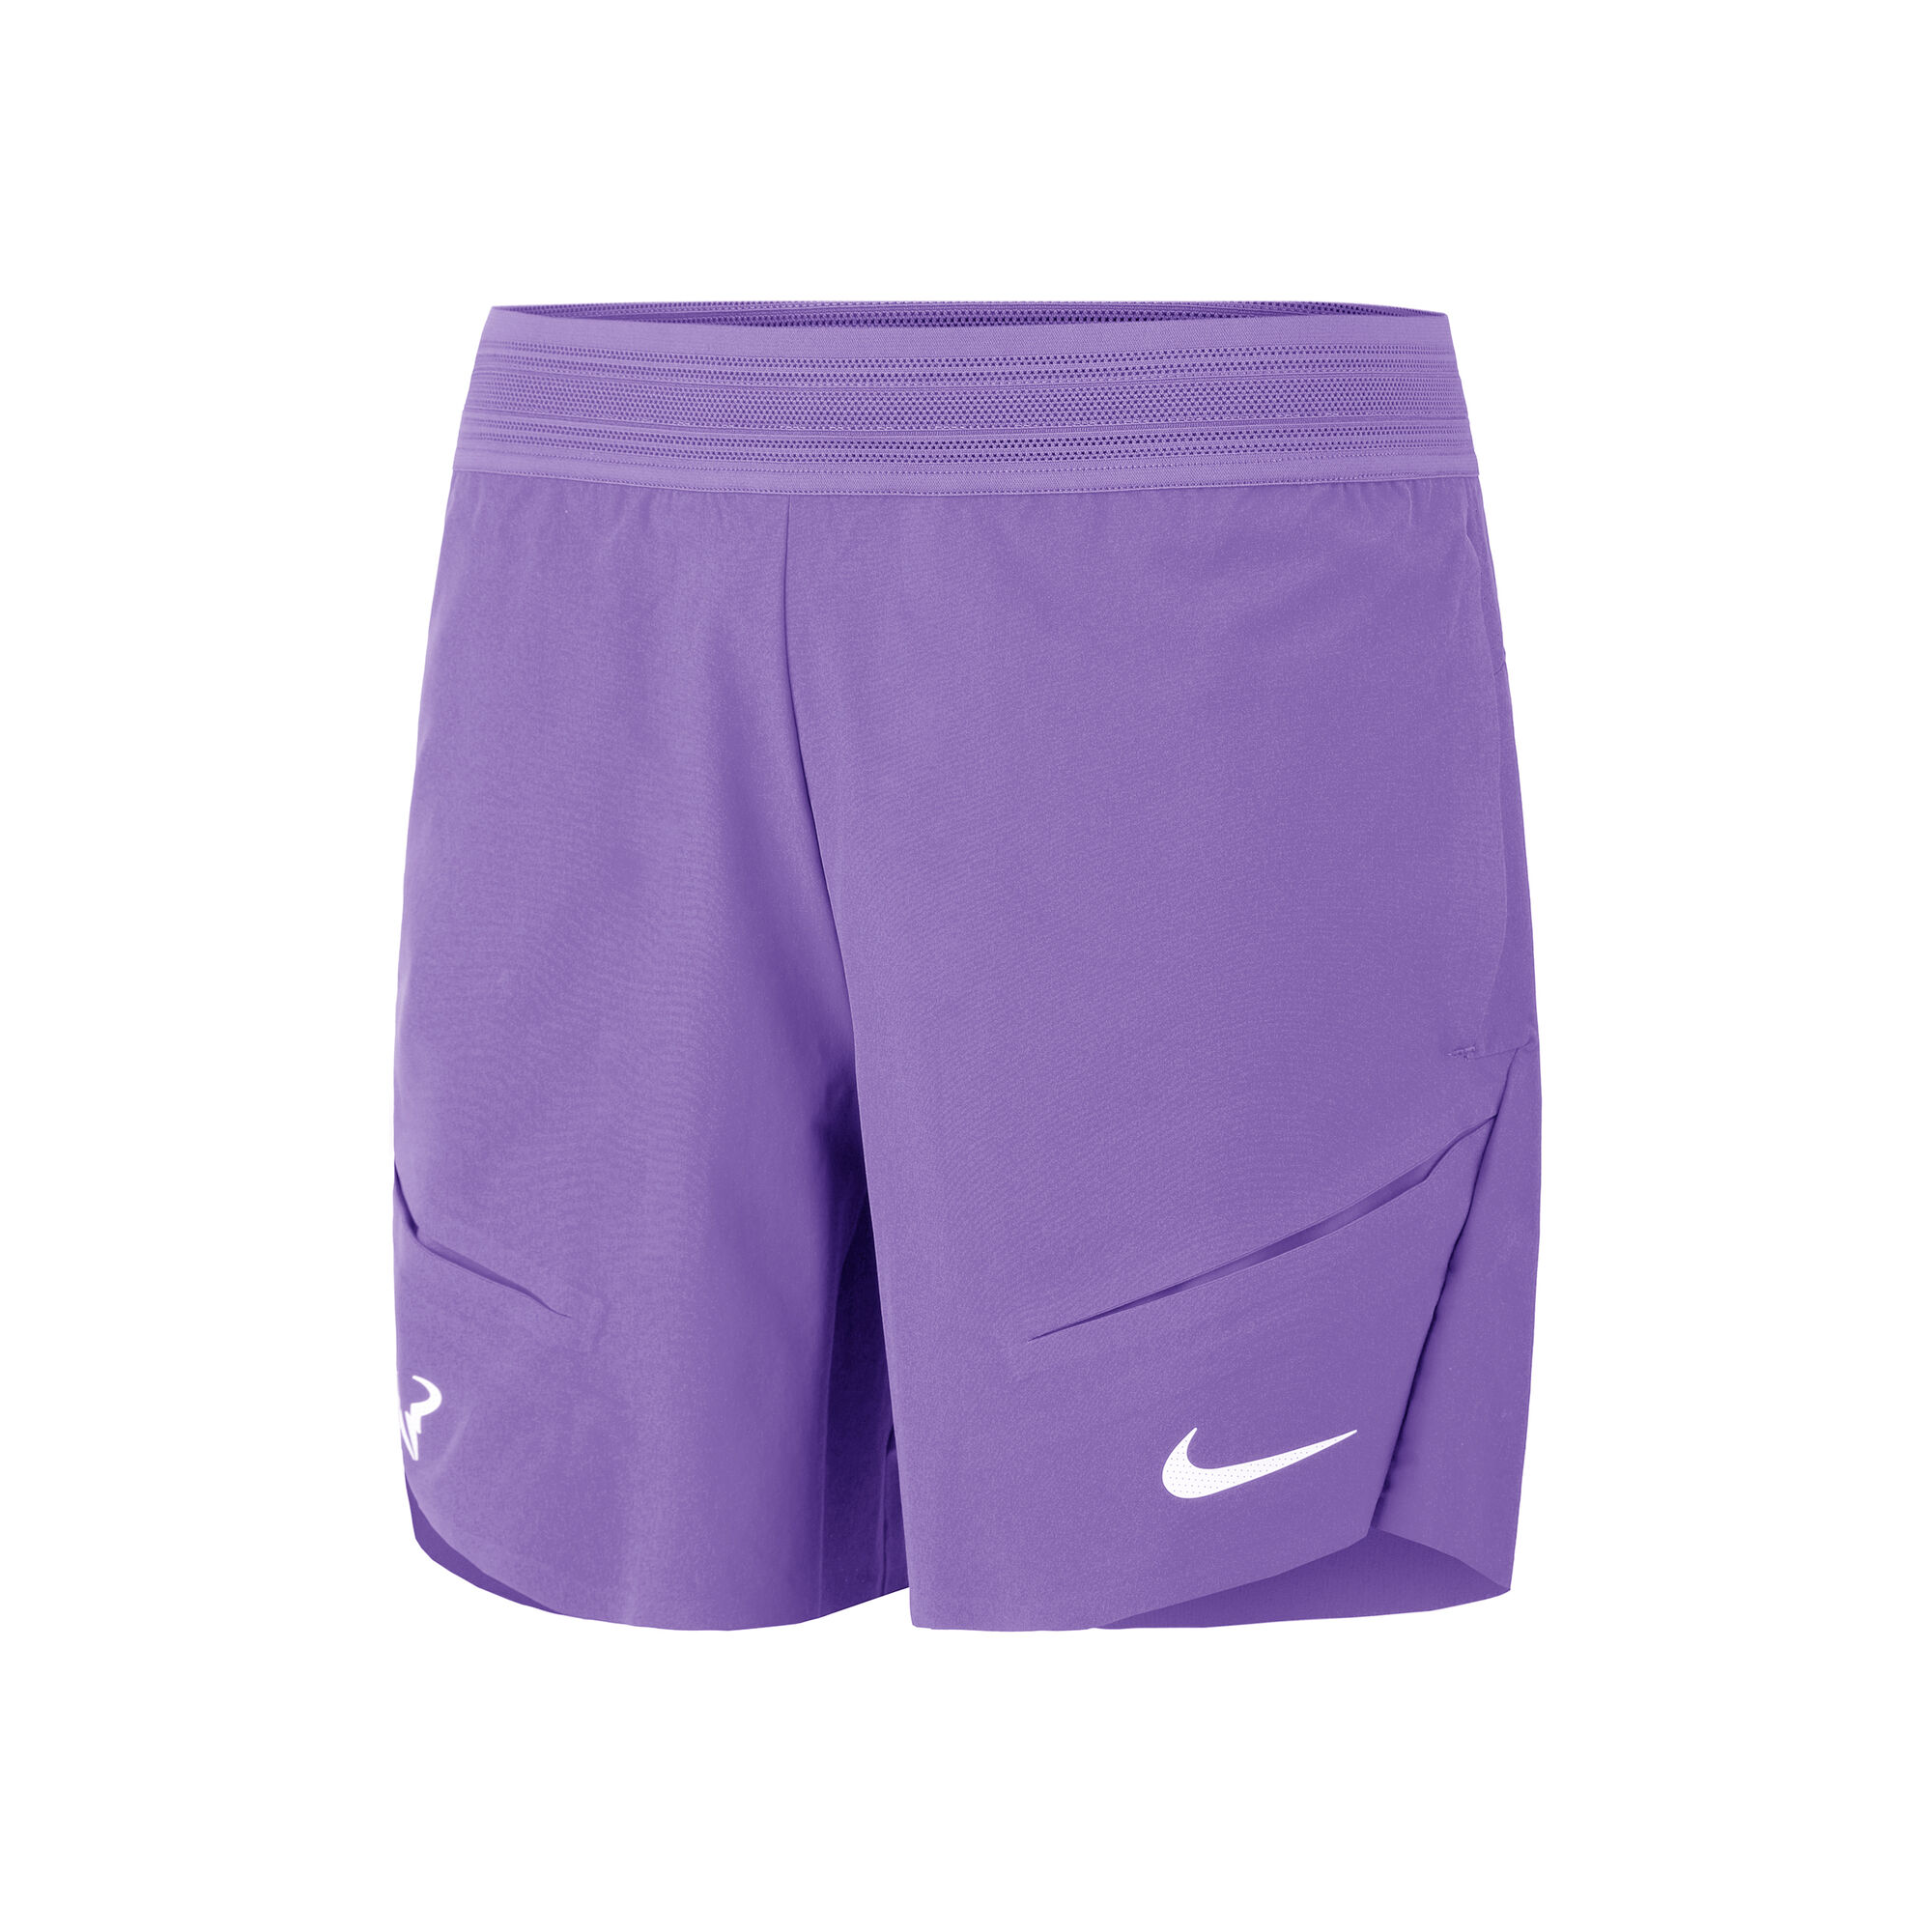 Nike Advantage Rafa 7in Shorts Hombres - Lila compra online Tennis-Point